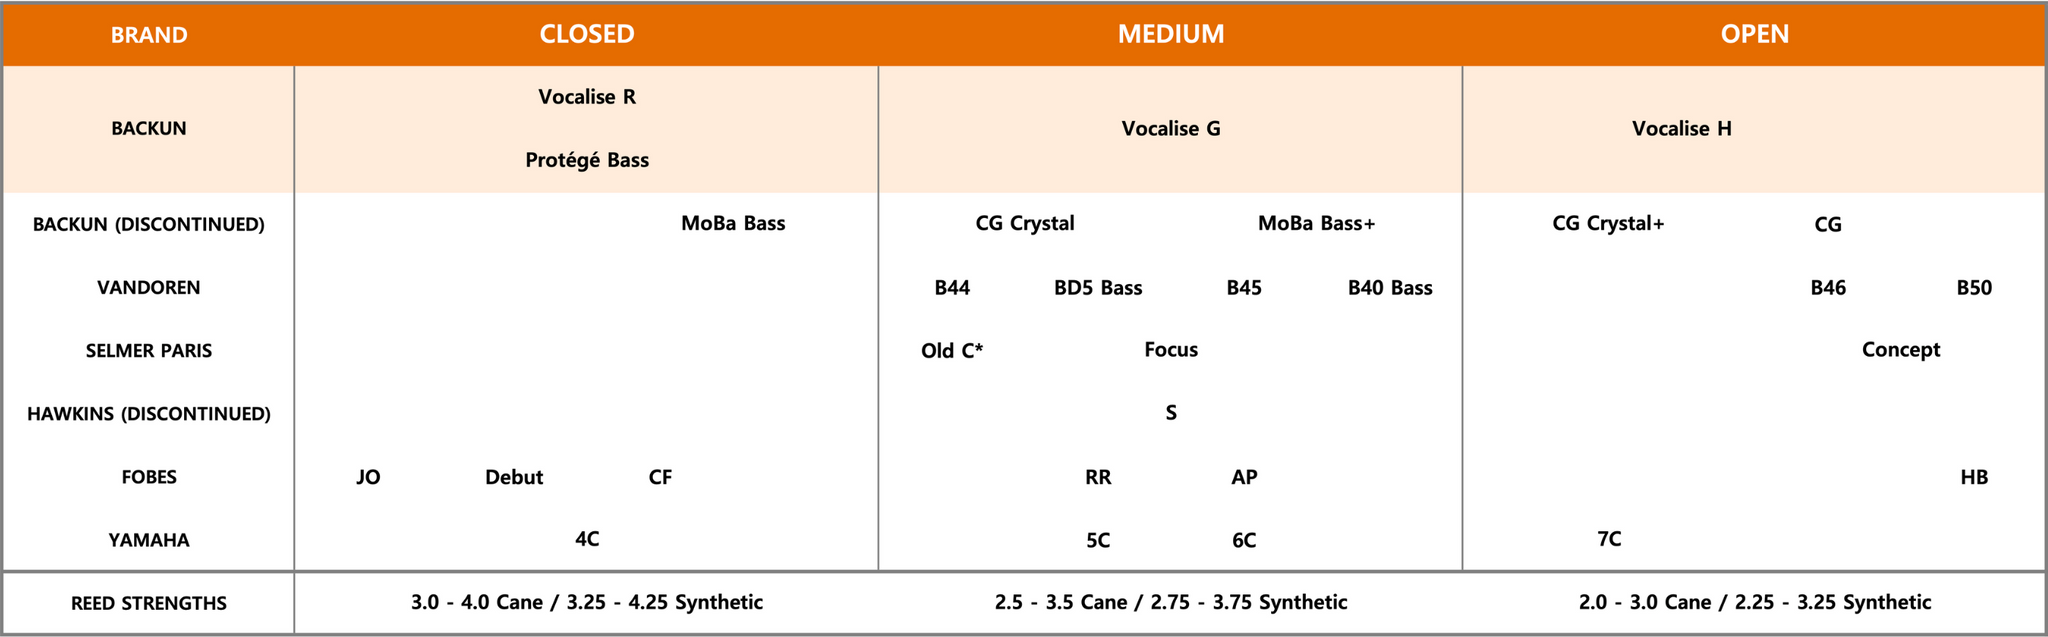 Backun Bass Clarinet Mouthpiece Comparison Chart